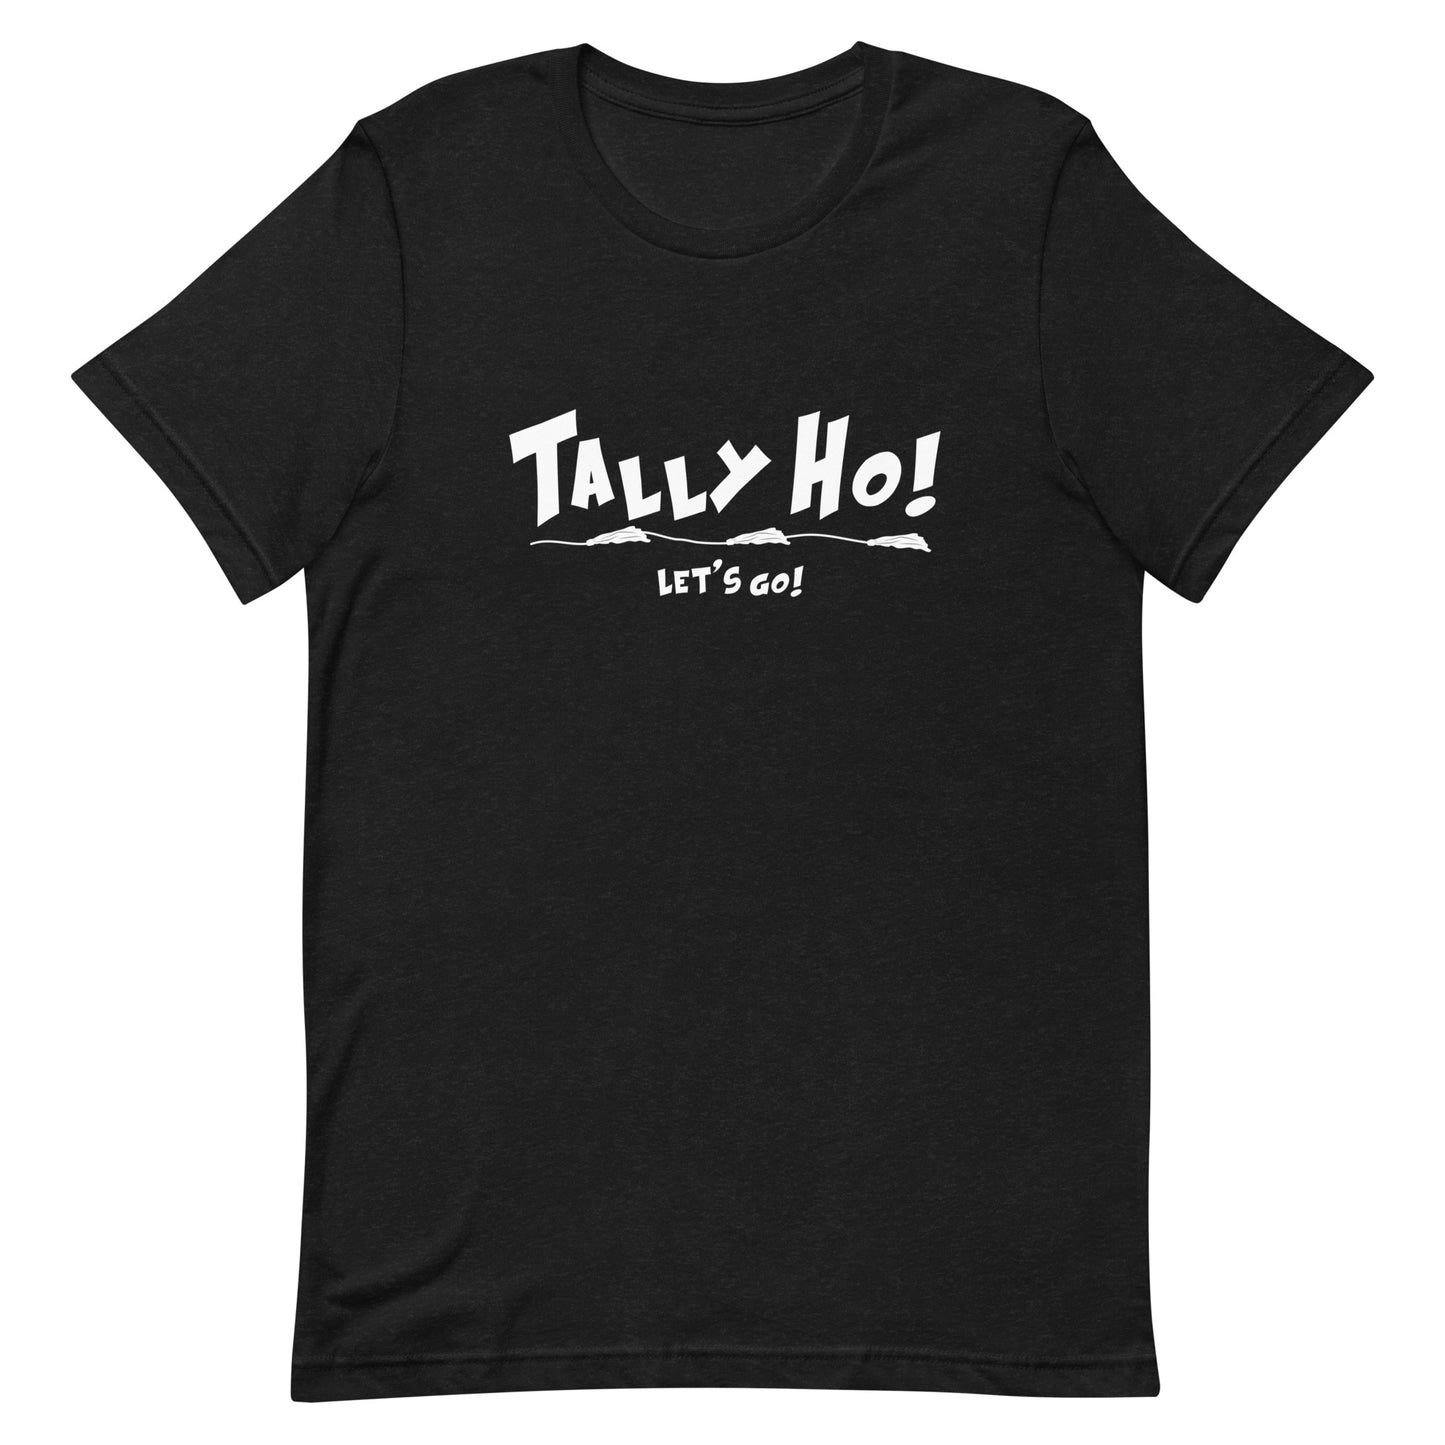 TALLY HO! LETS GO! - Unisex t-shirt